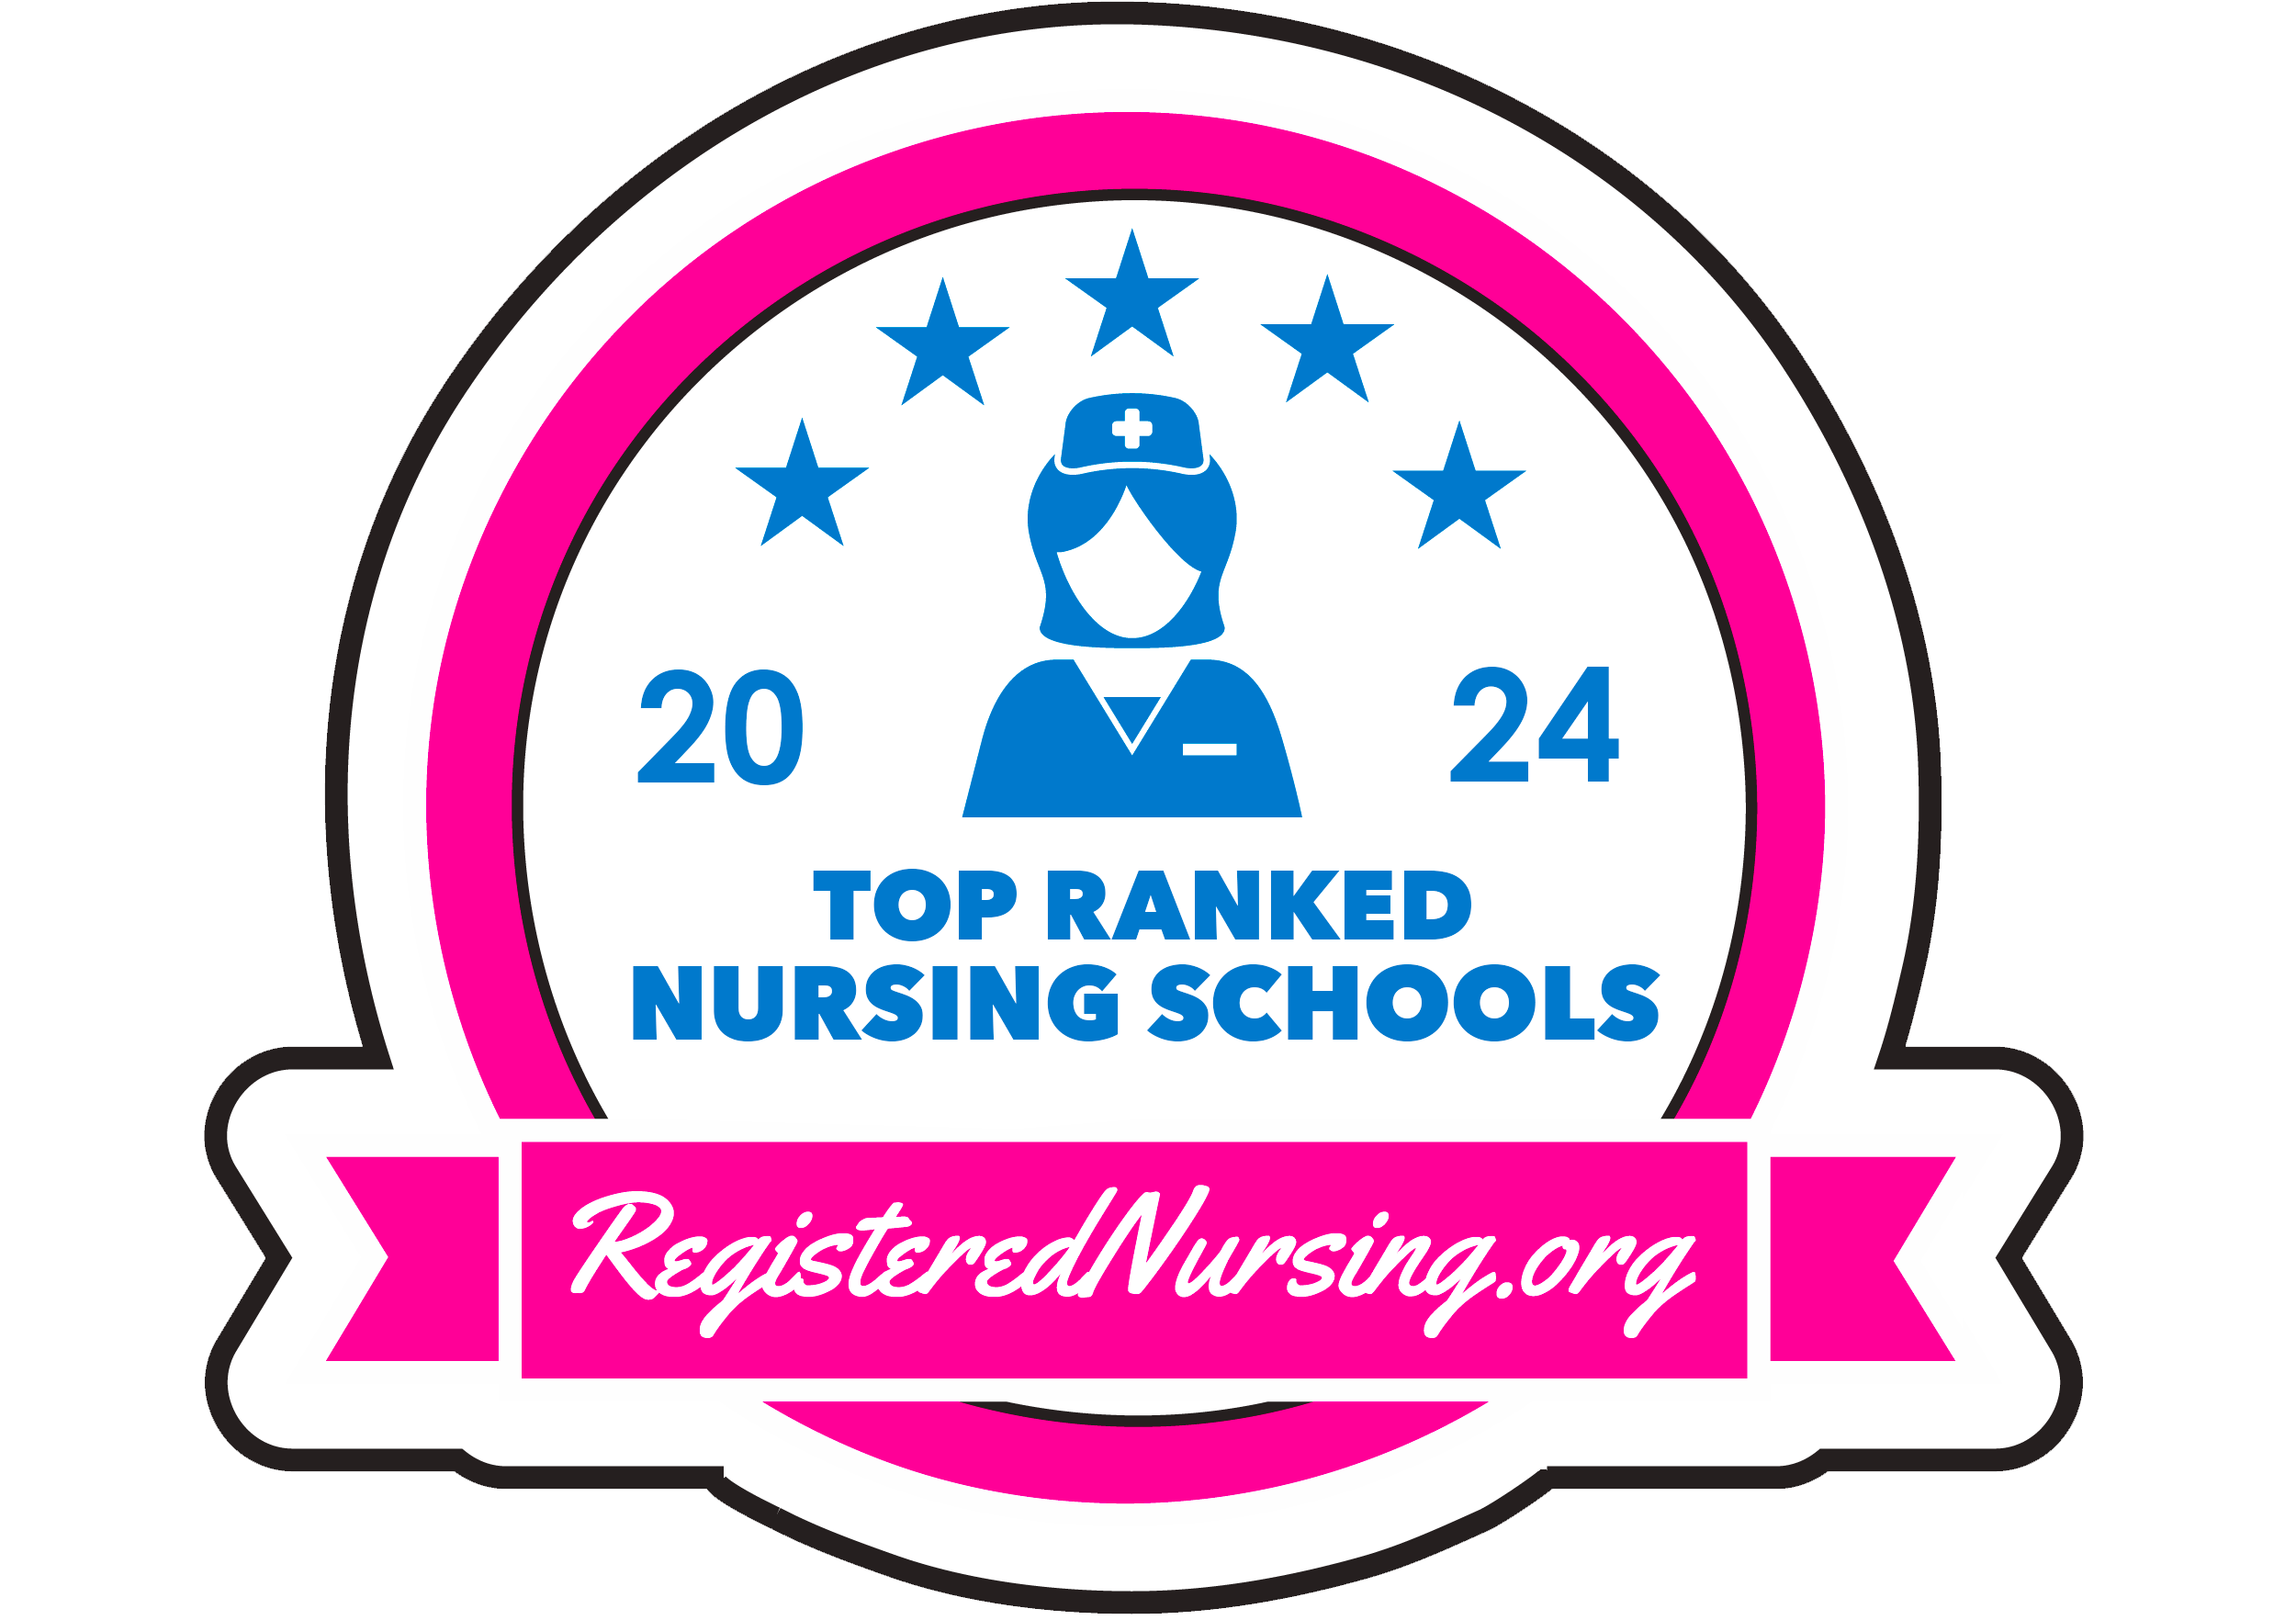 rn.org top nursing schools ranking logo